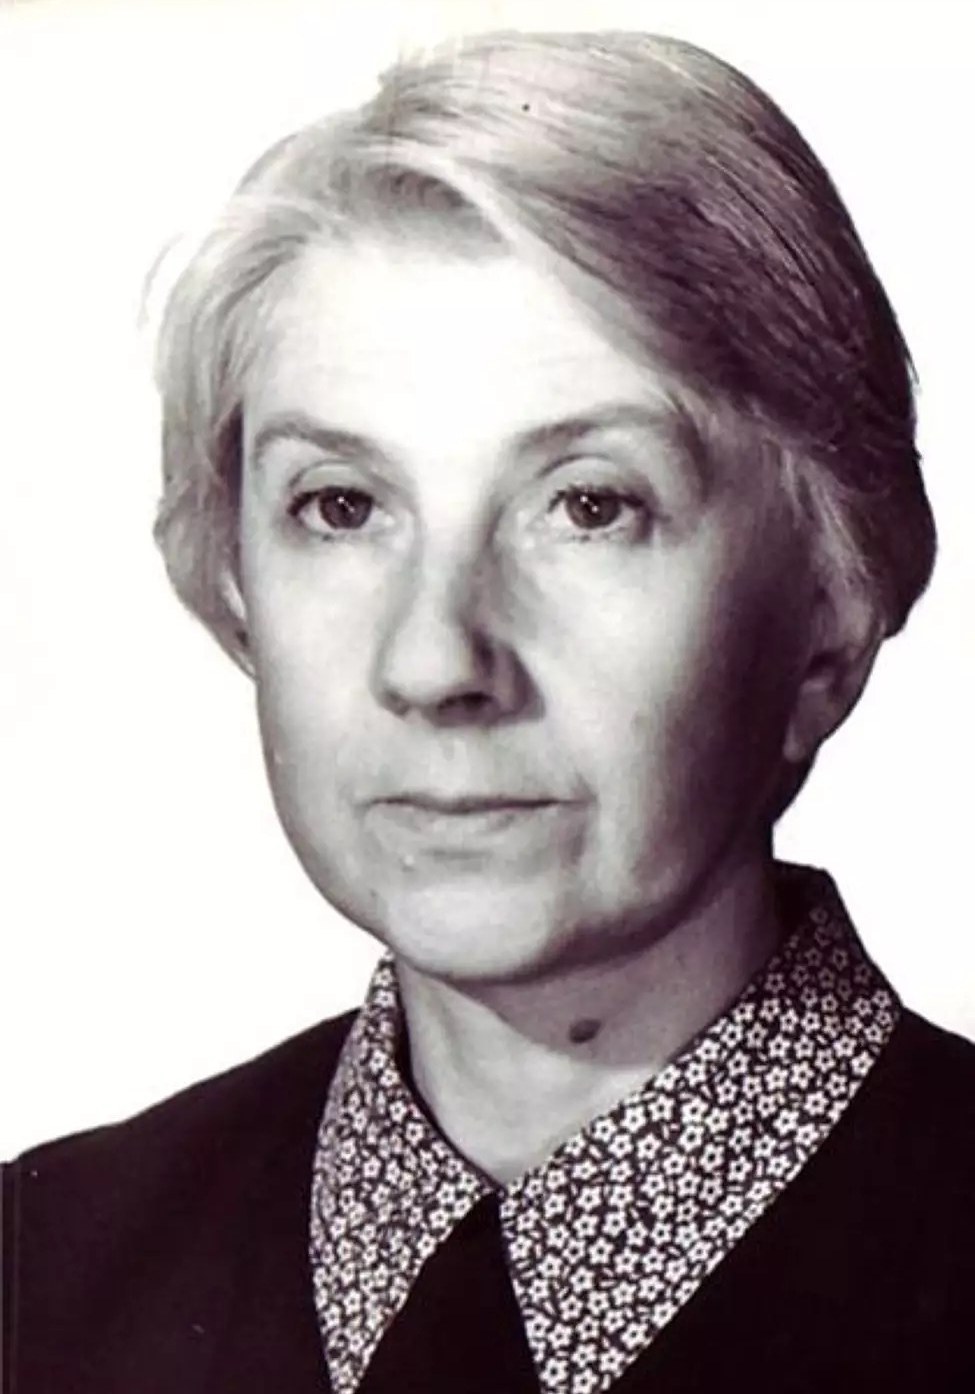 Lyudmila Arinina